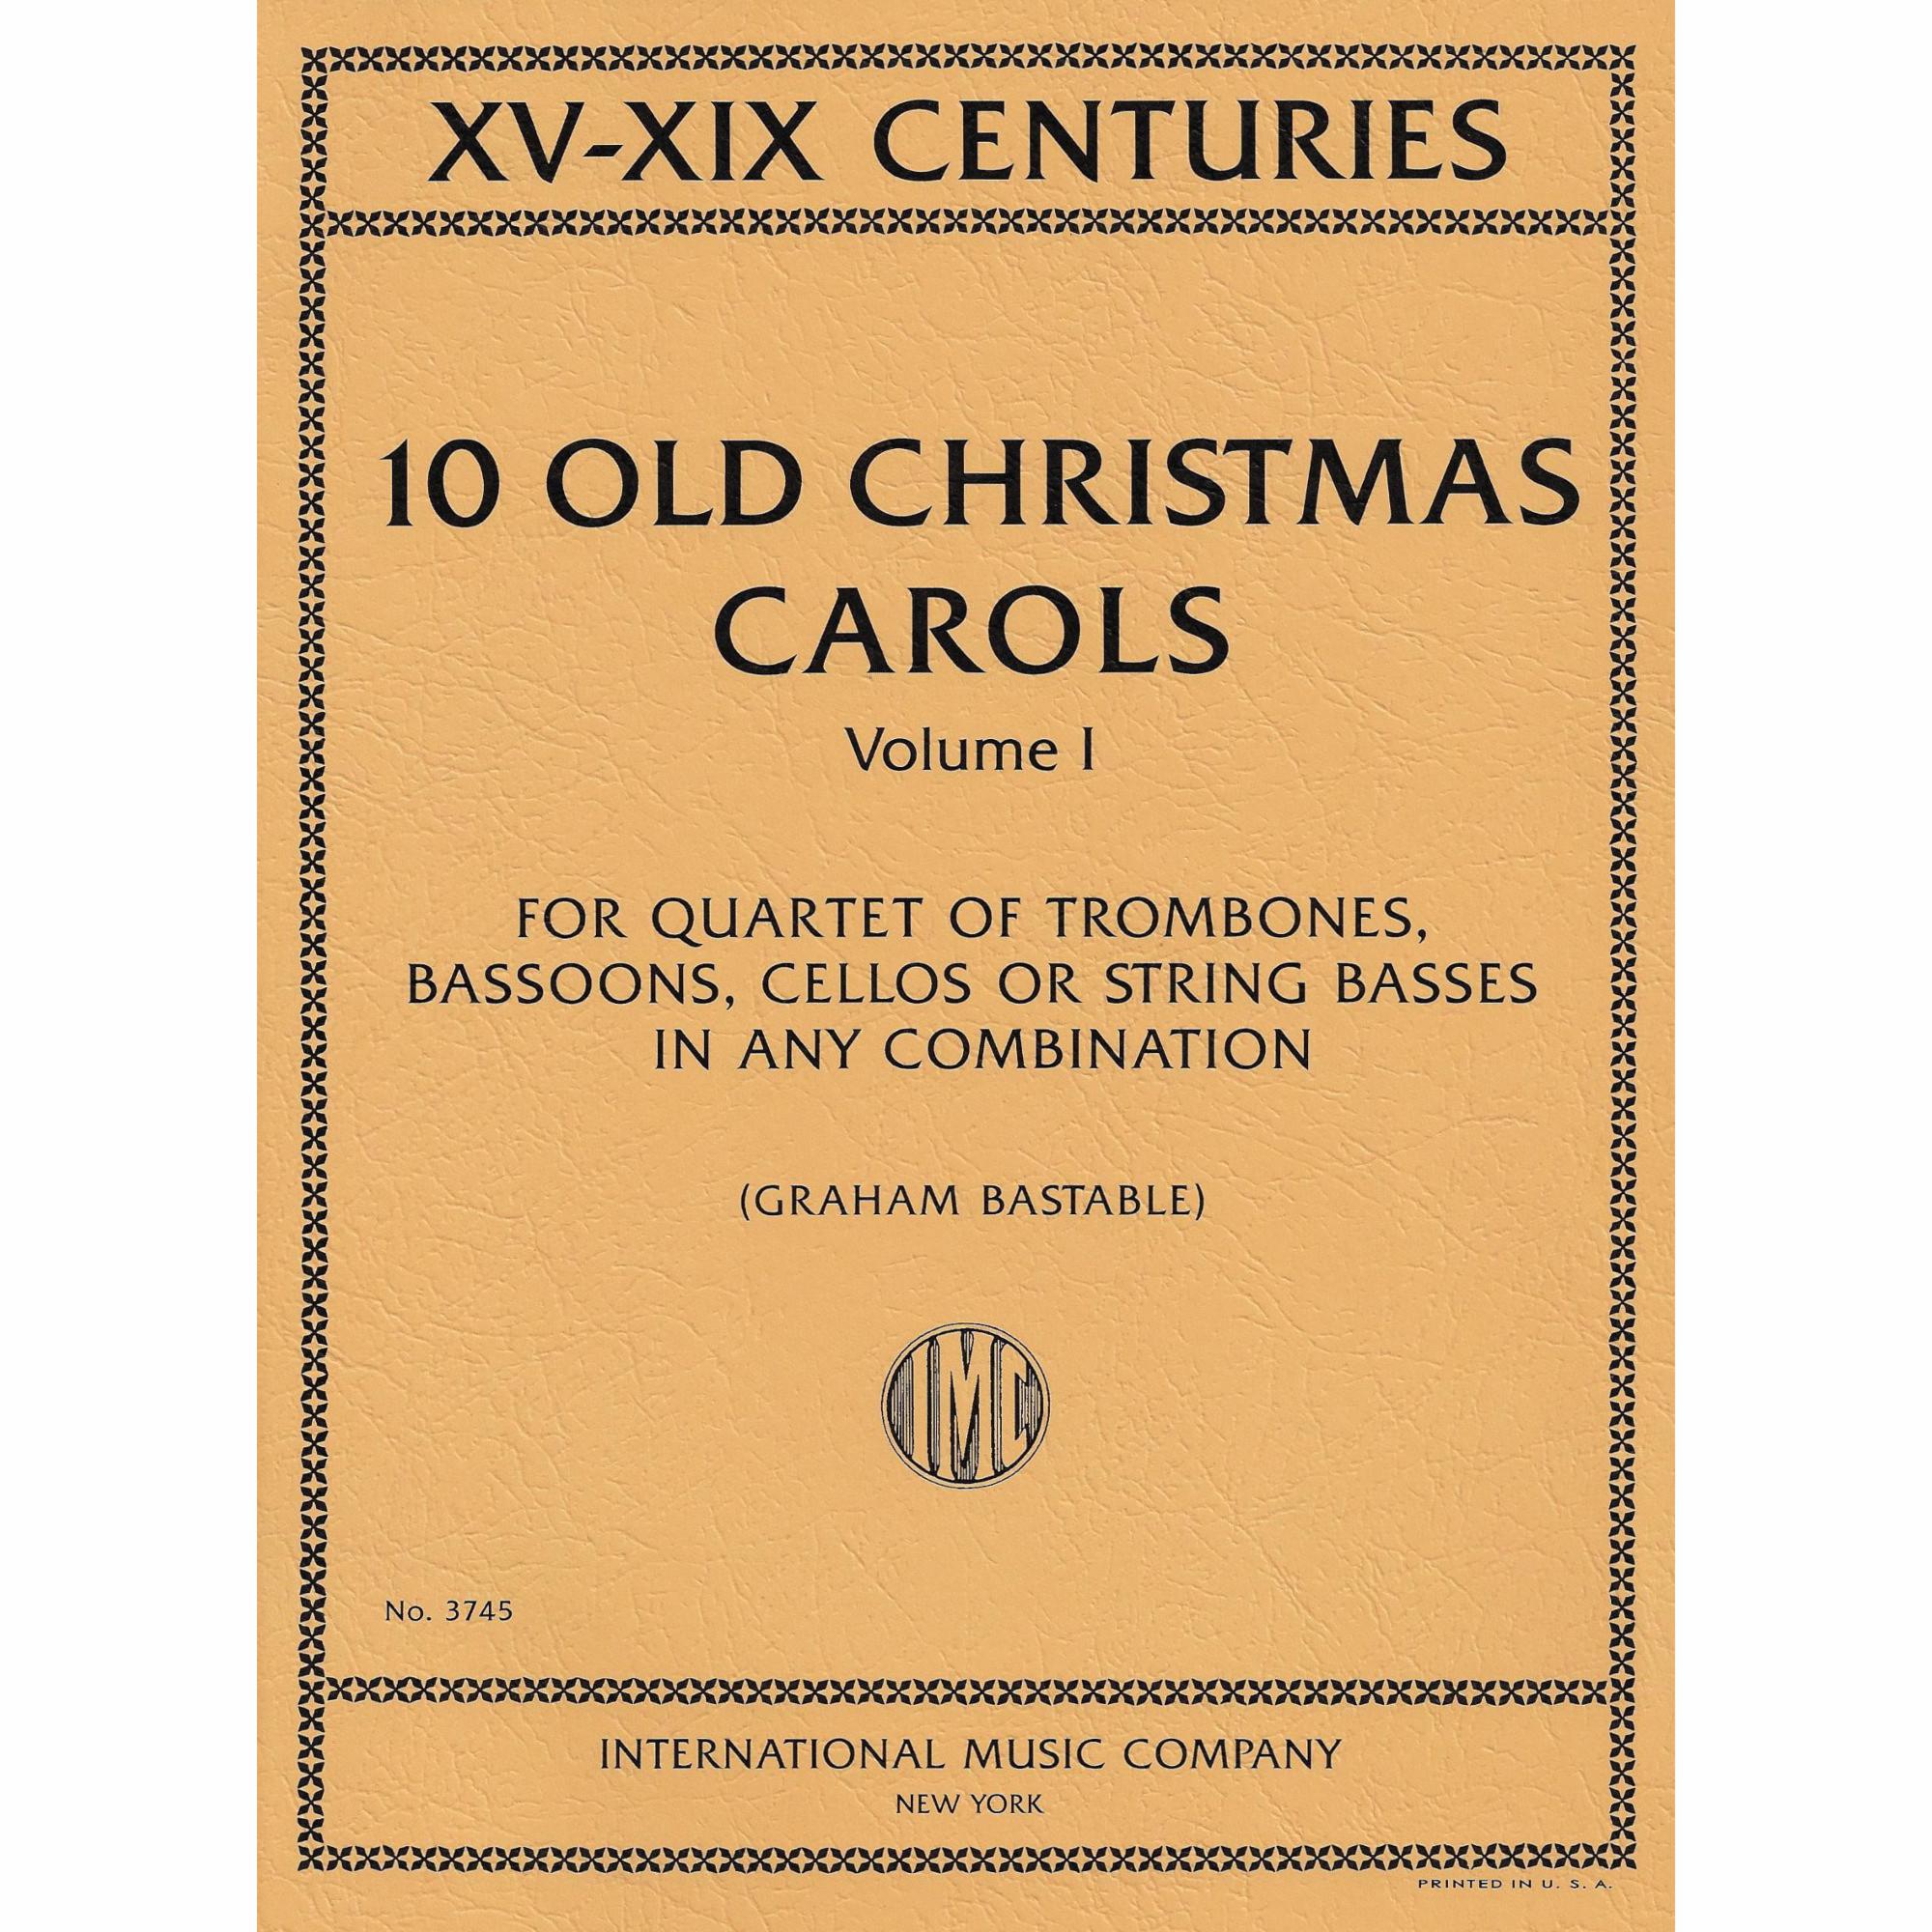 Ten Old Christmas Carols for Four Cellos